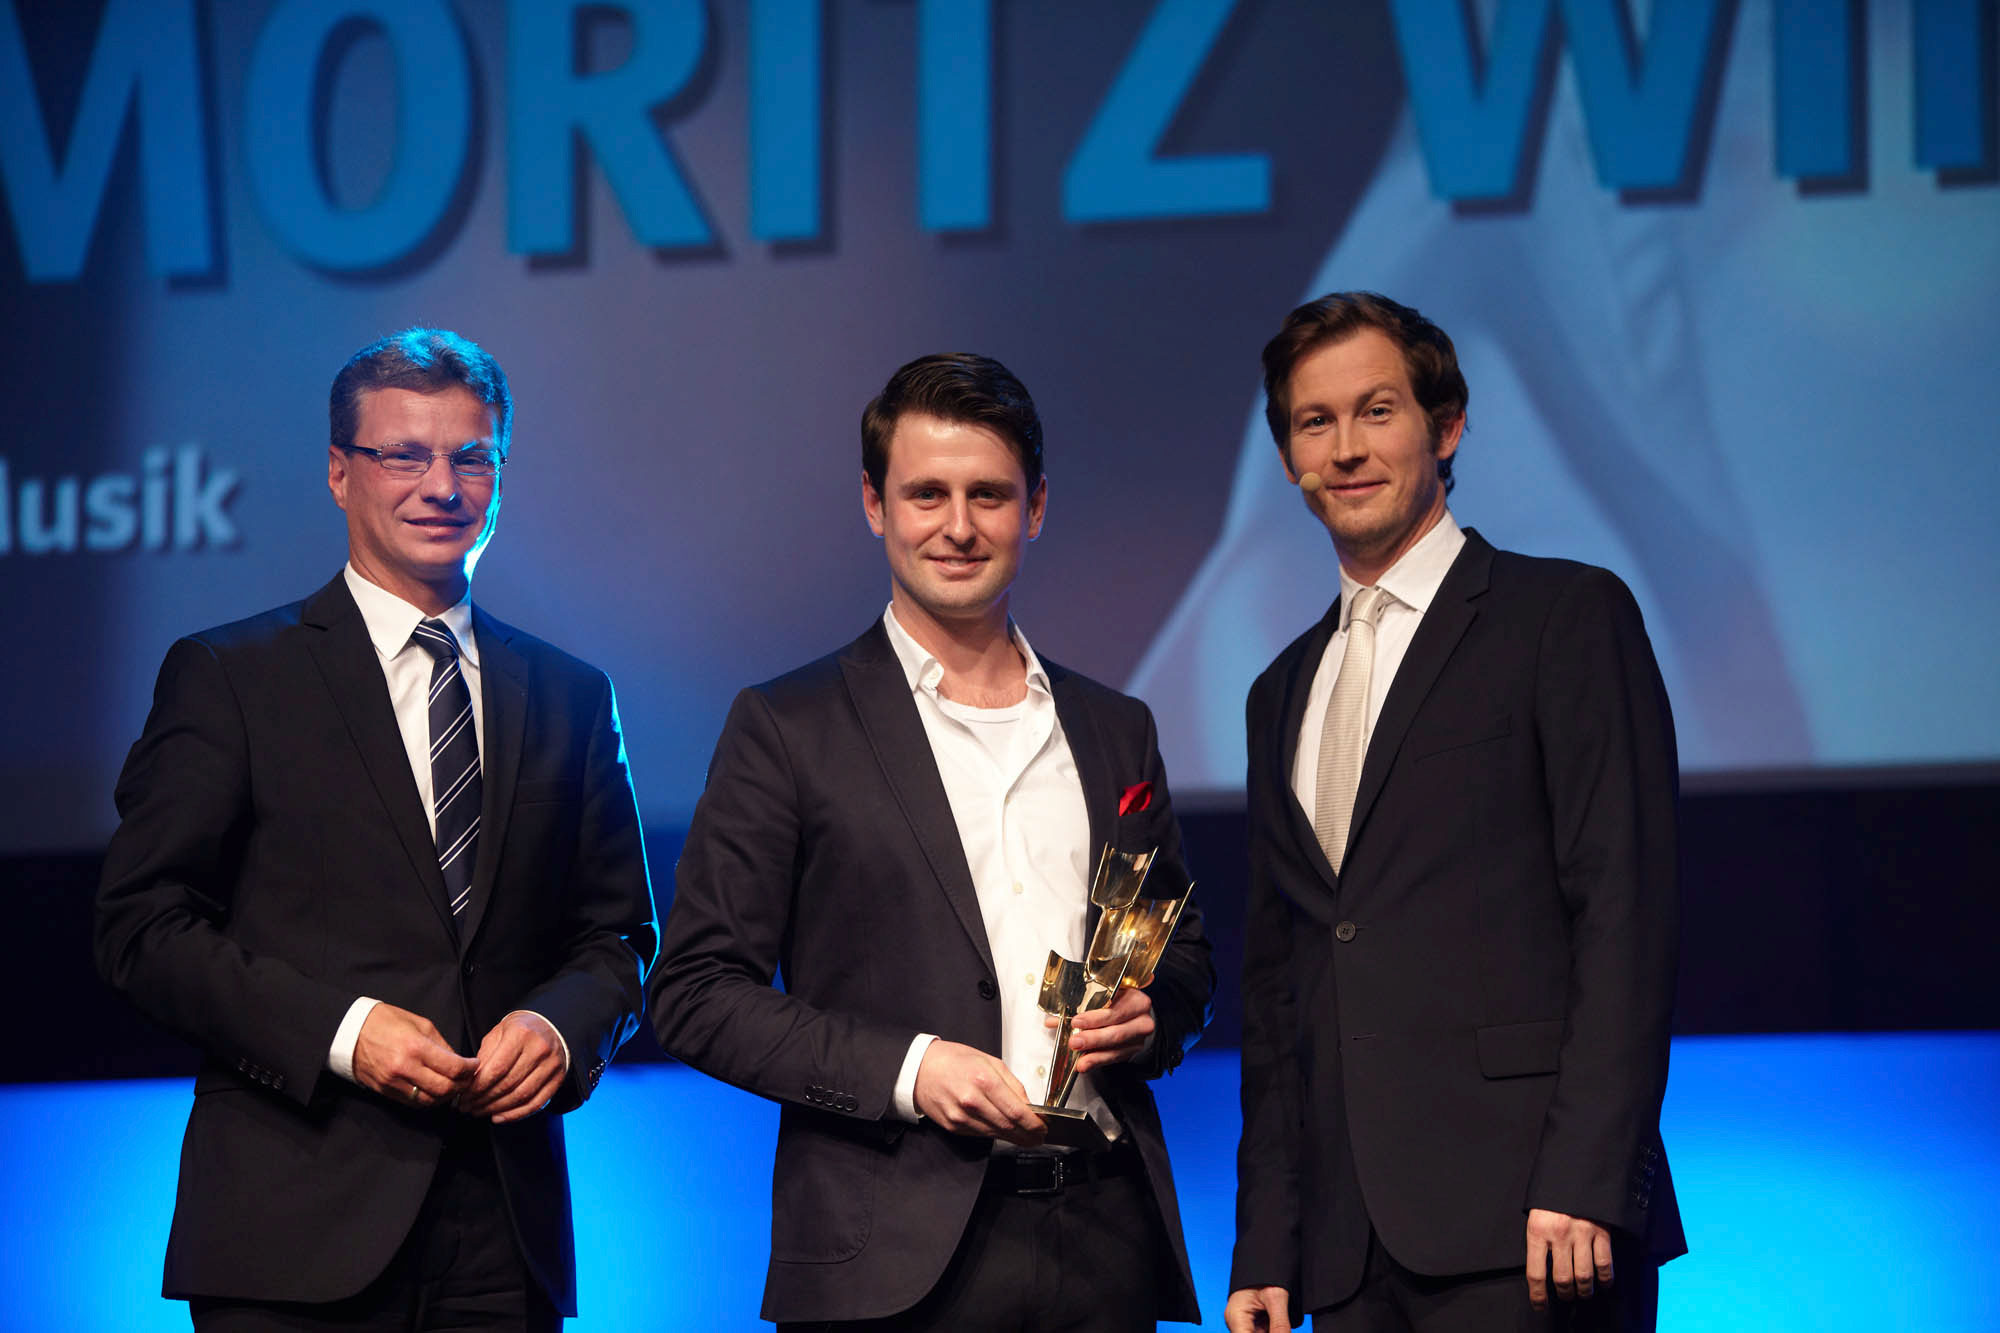 State Secretary Bernd Sibler presents the Bavarian Culture Prize to Moritz Winker